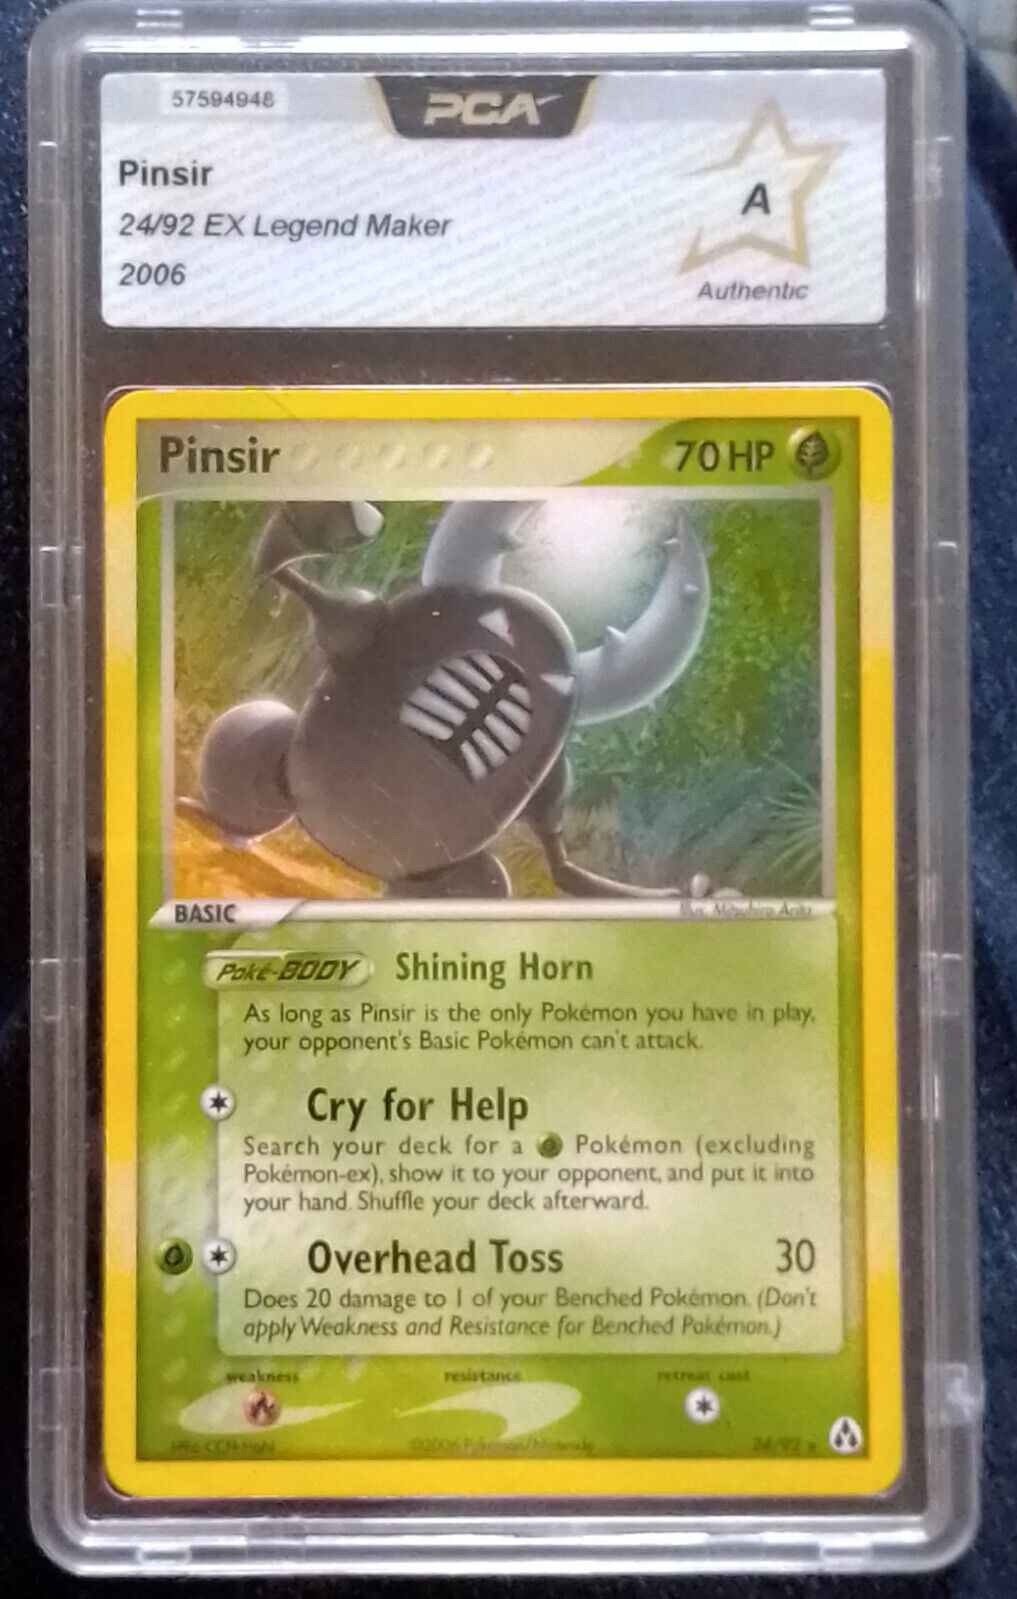 Pokemon-Pinsir-EX Legend Maker-24/92-2006-PCA Card